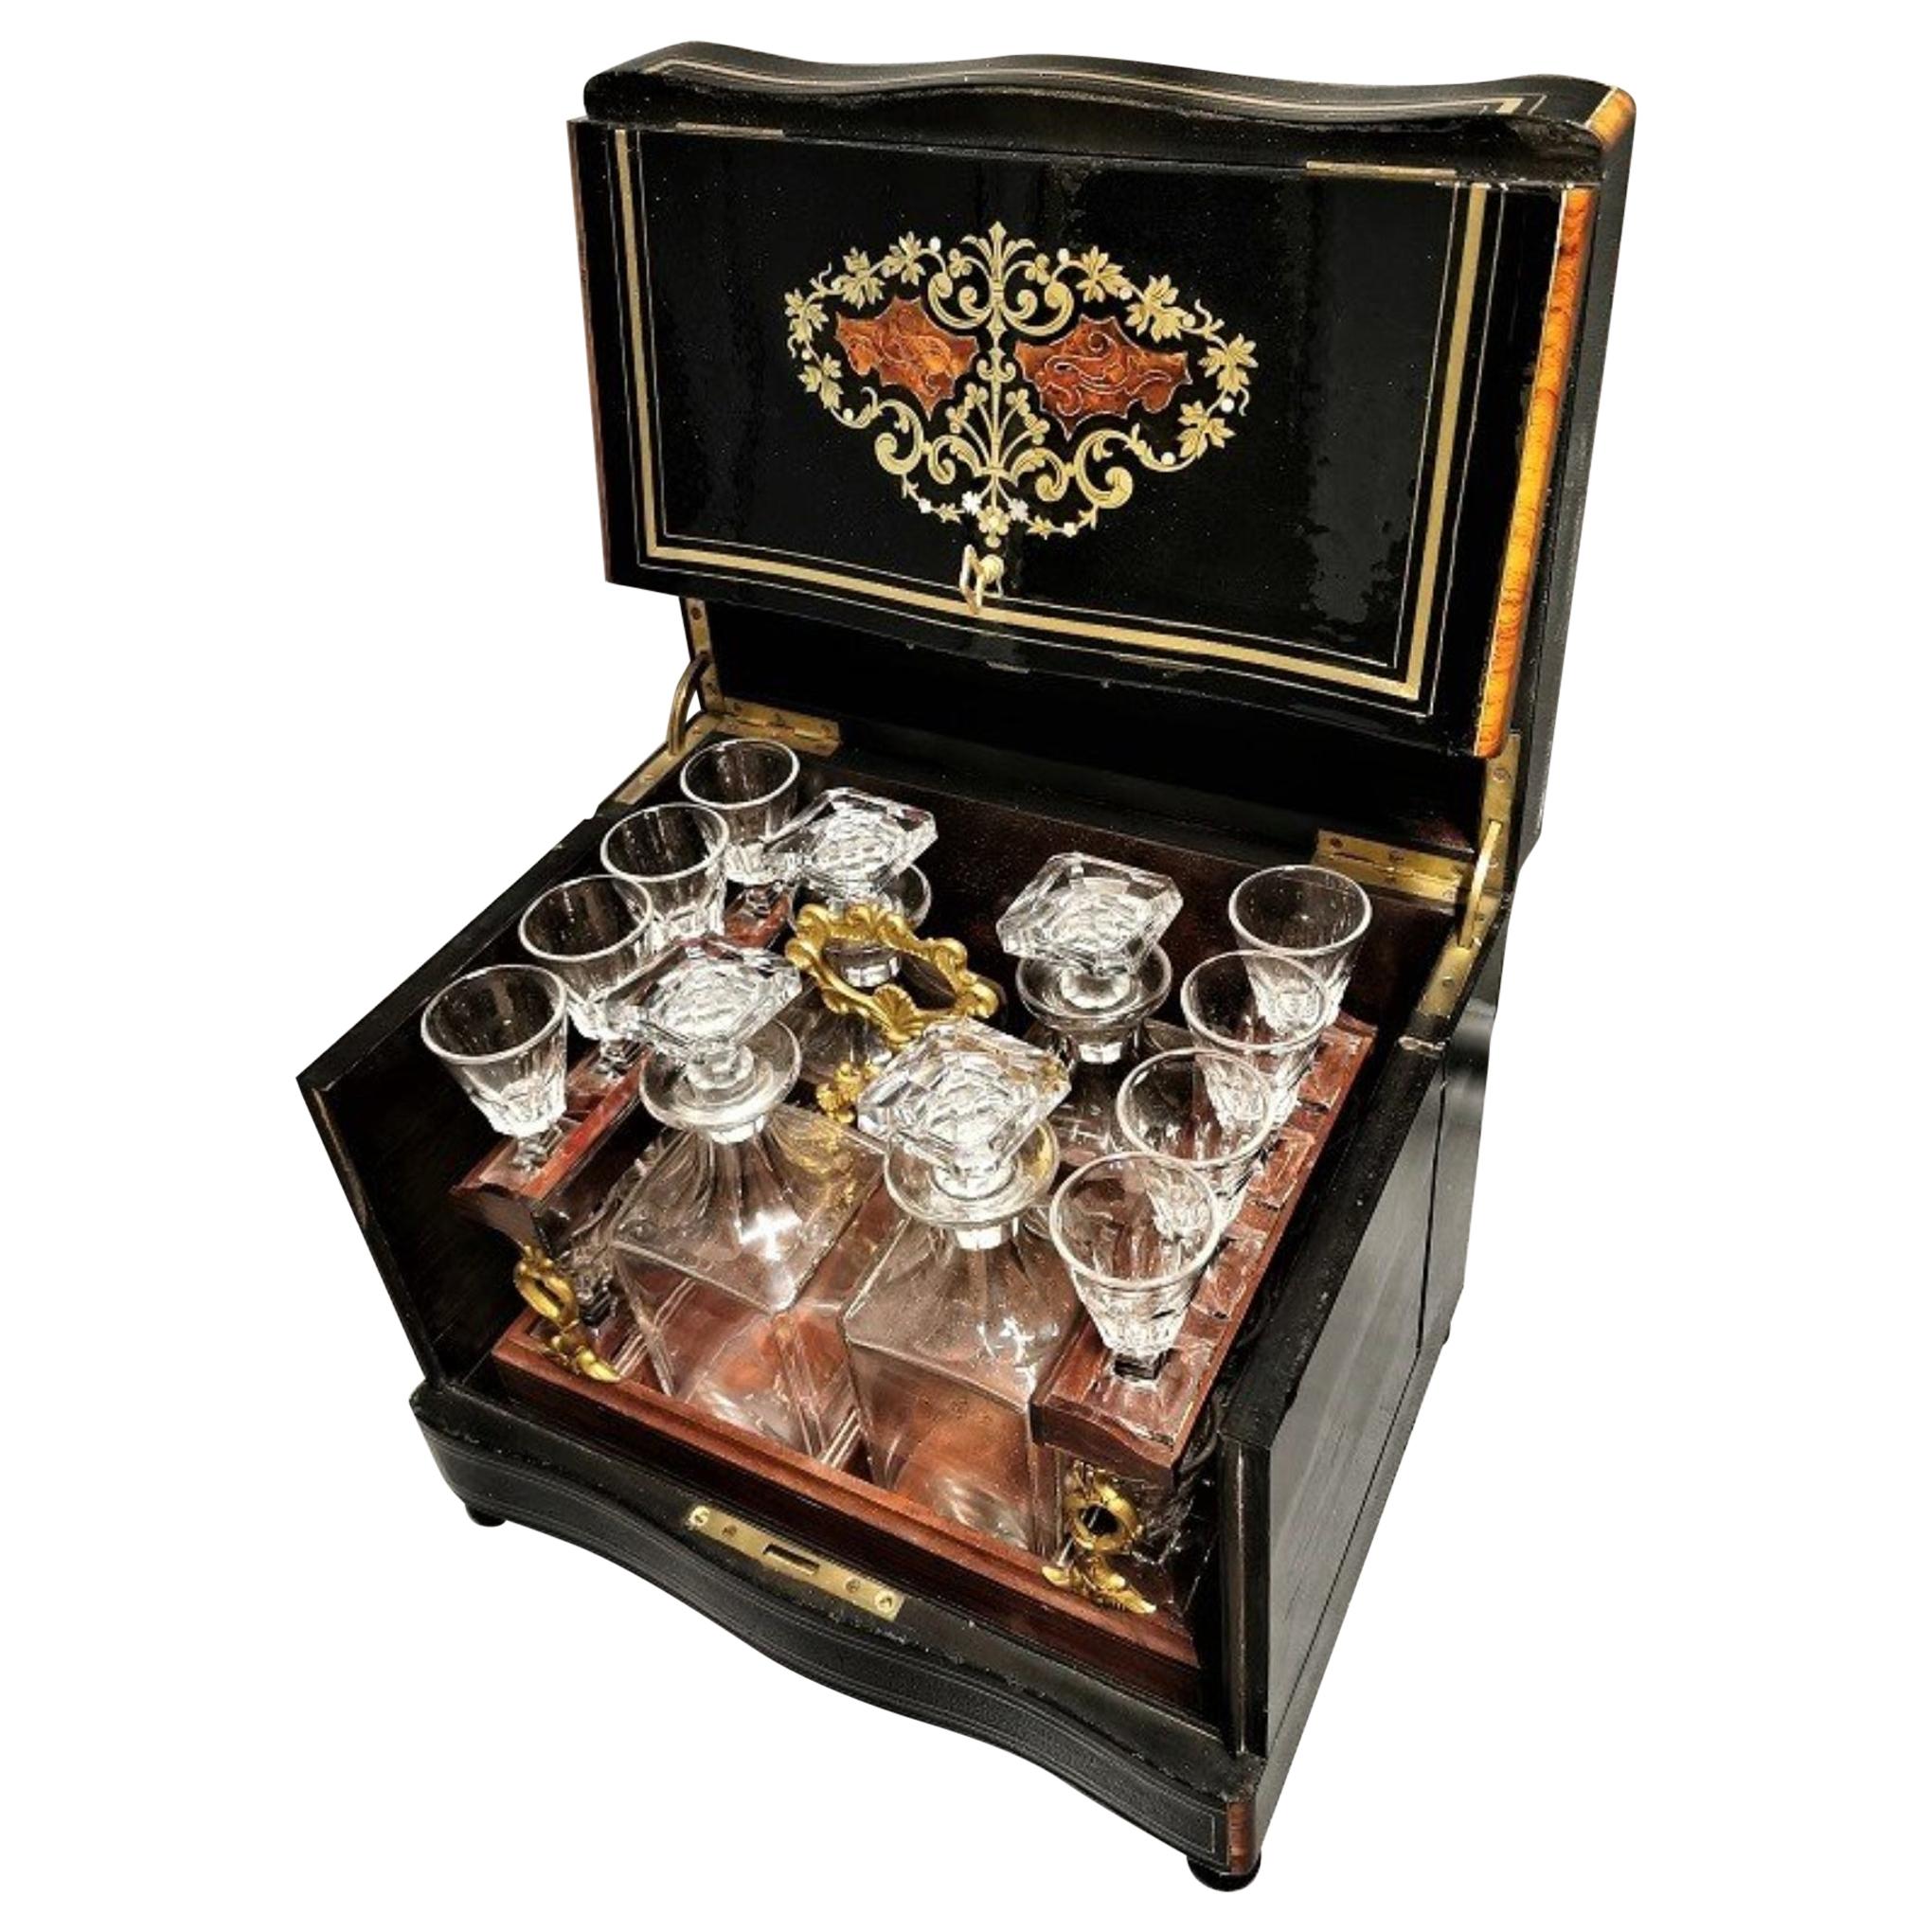 Napoleon III Liquor Cellar and Baccarat Crystal Set, France, 19th Century